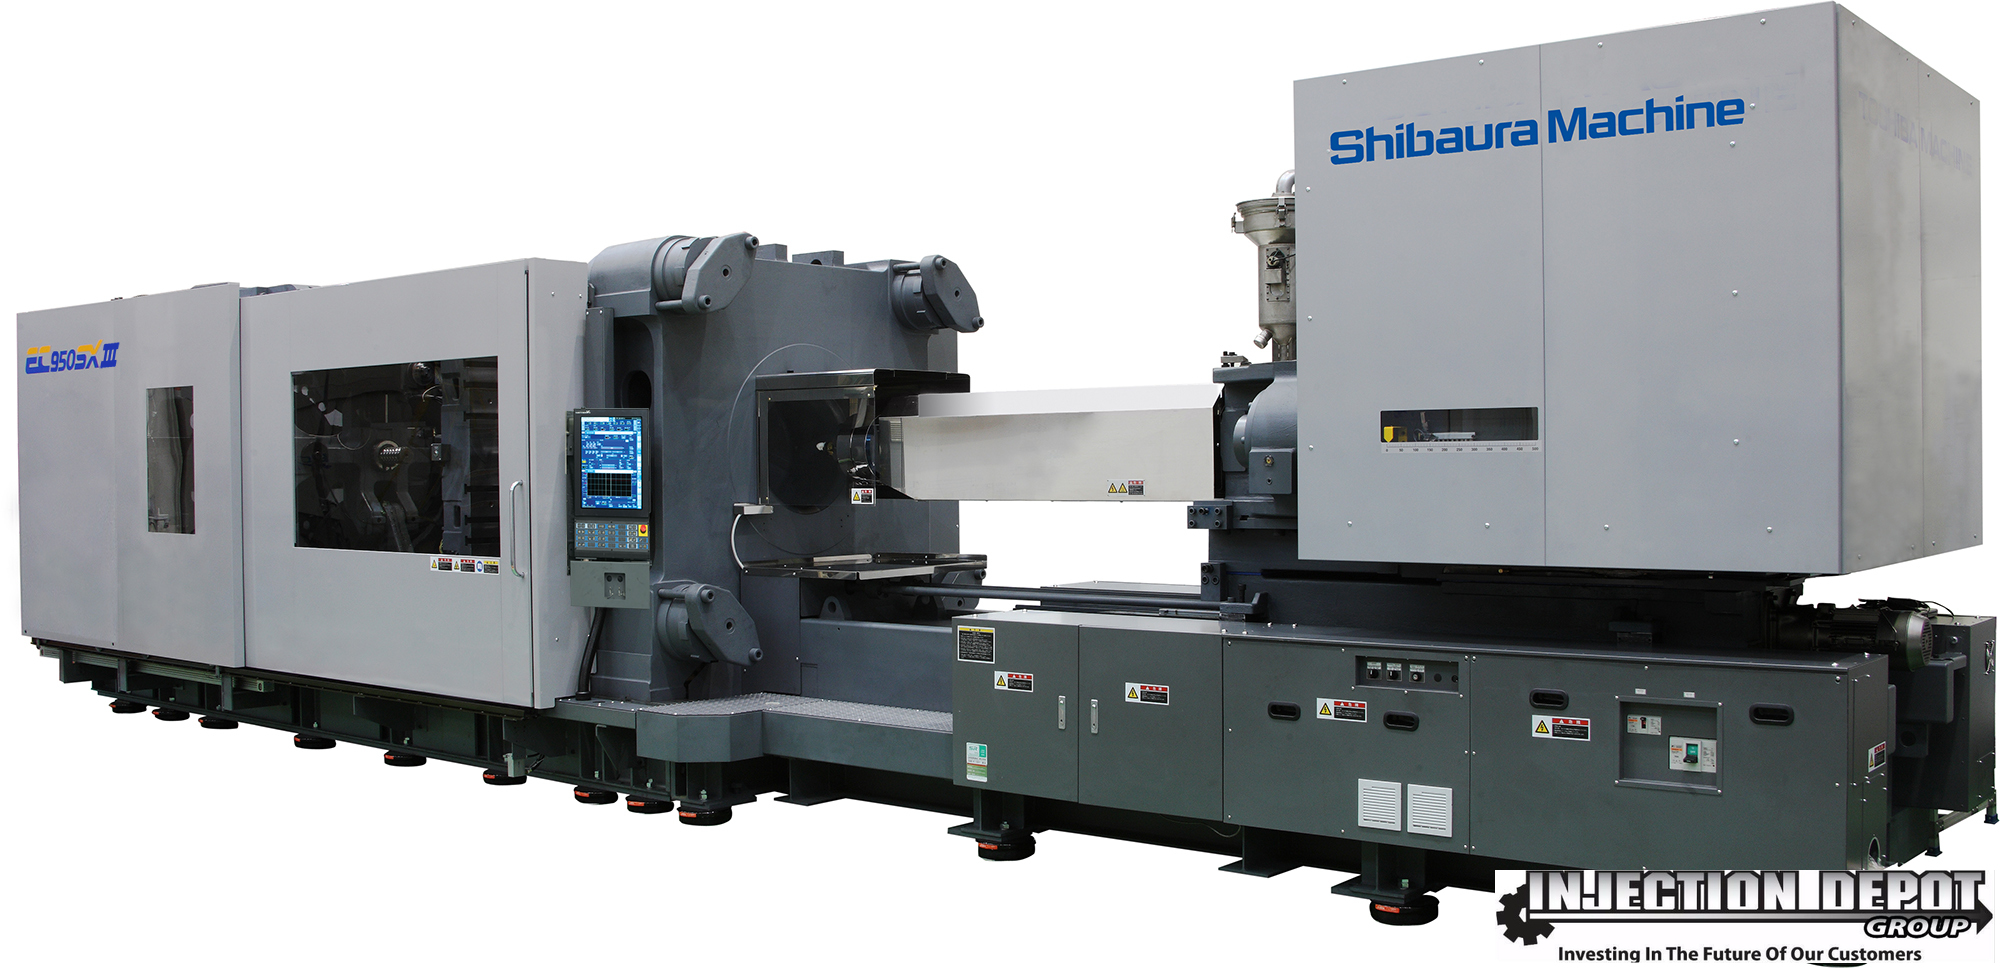 SHIBAURA MACHINE EC950SXIIIV70-i120 B Horizontal Injection Moulding Machines | INJECTION DEPOT GROUP